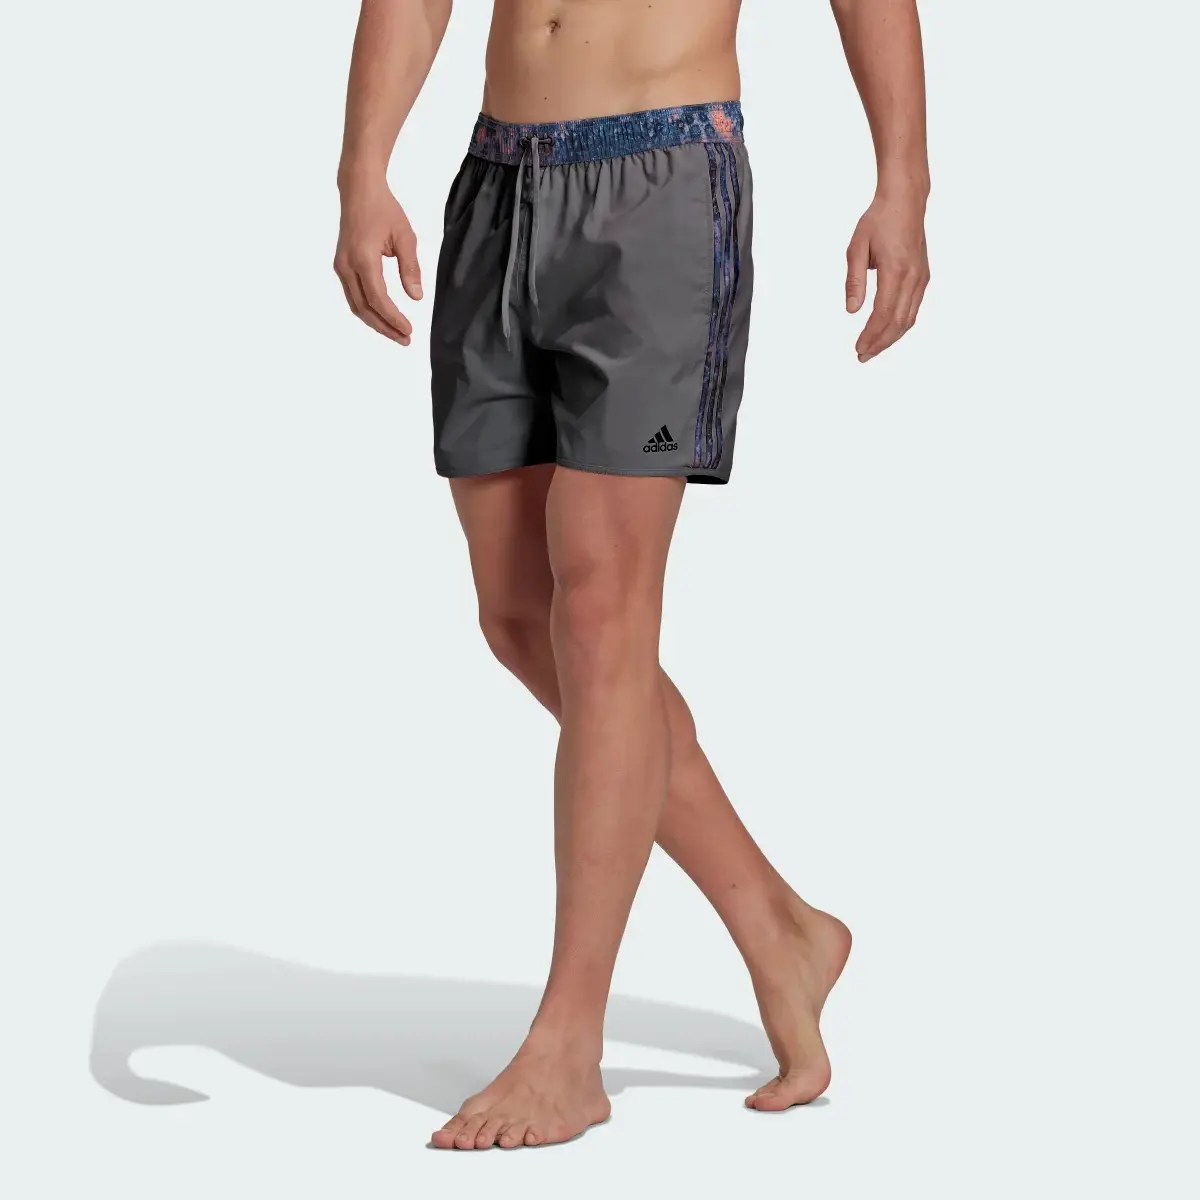 Adidas Short Length Melting Salt Reversible CLX Swim Shorts. 2